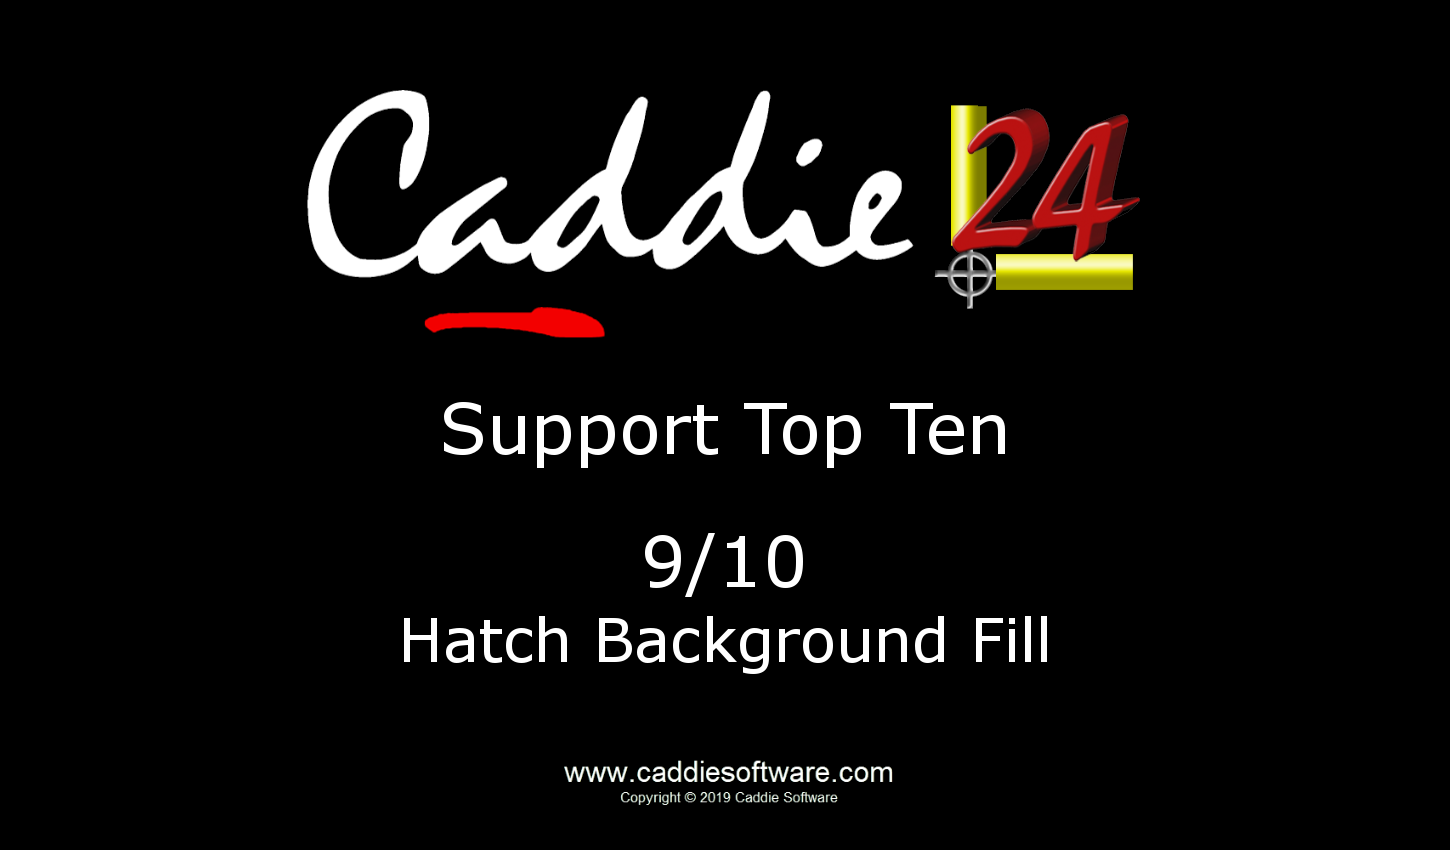 # 9/10 Hatch Background Fill